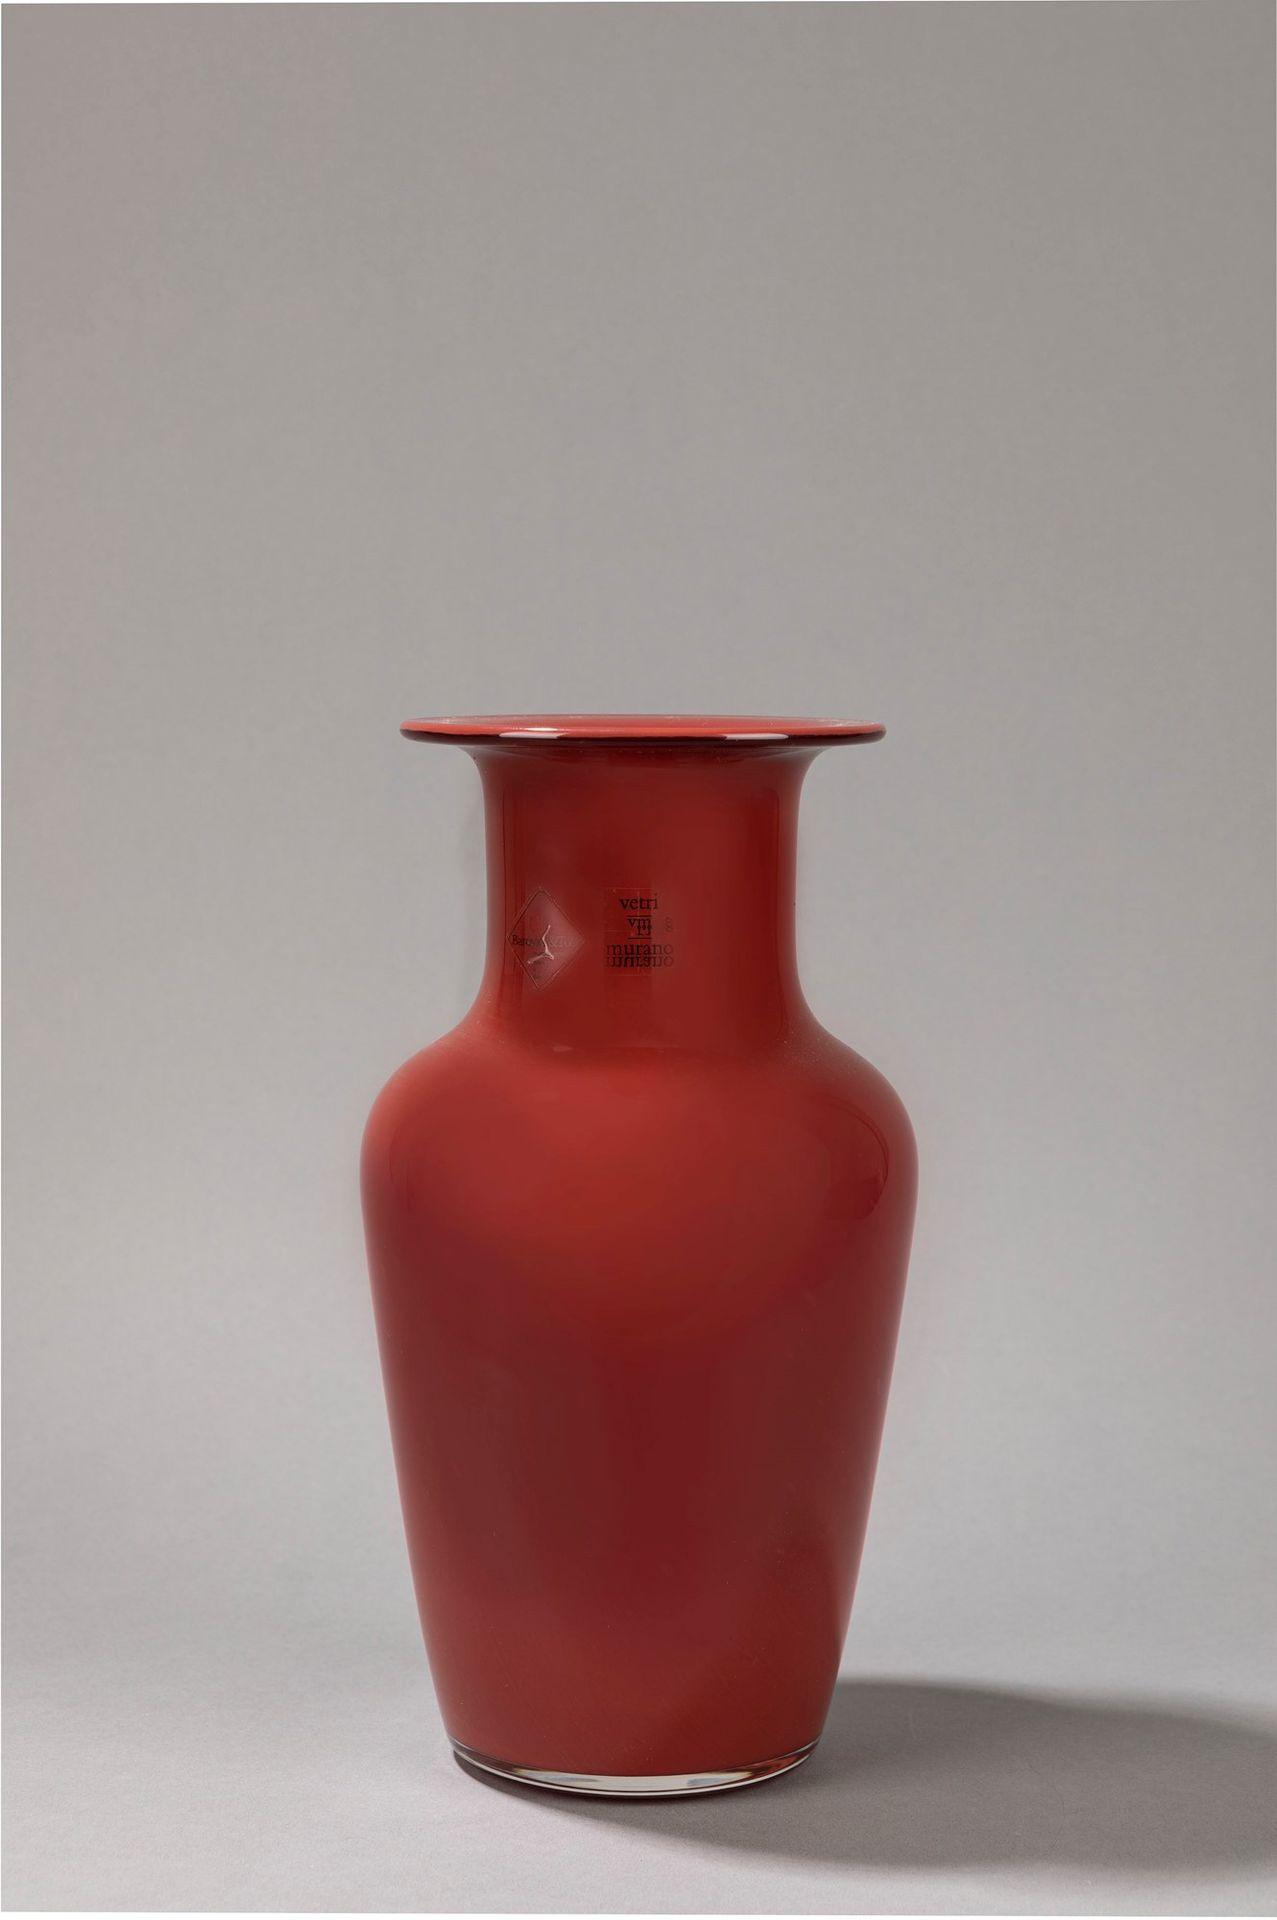 Barovier e Toso 花瓶，1970年约

h 30 x 20 cm
红色吹制玻璃。

原始标签。底座下有签名